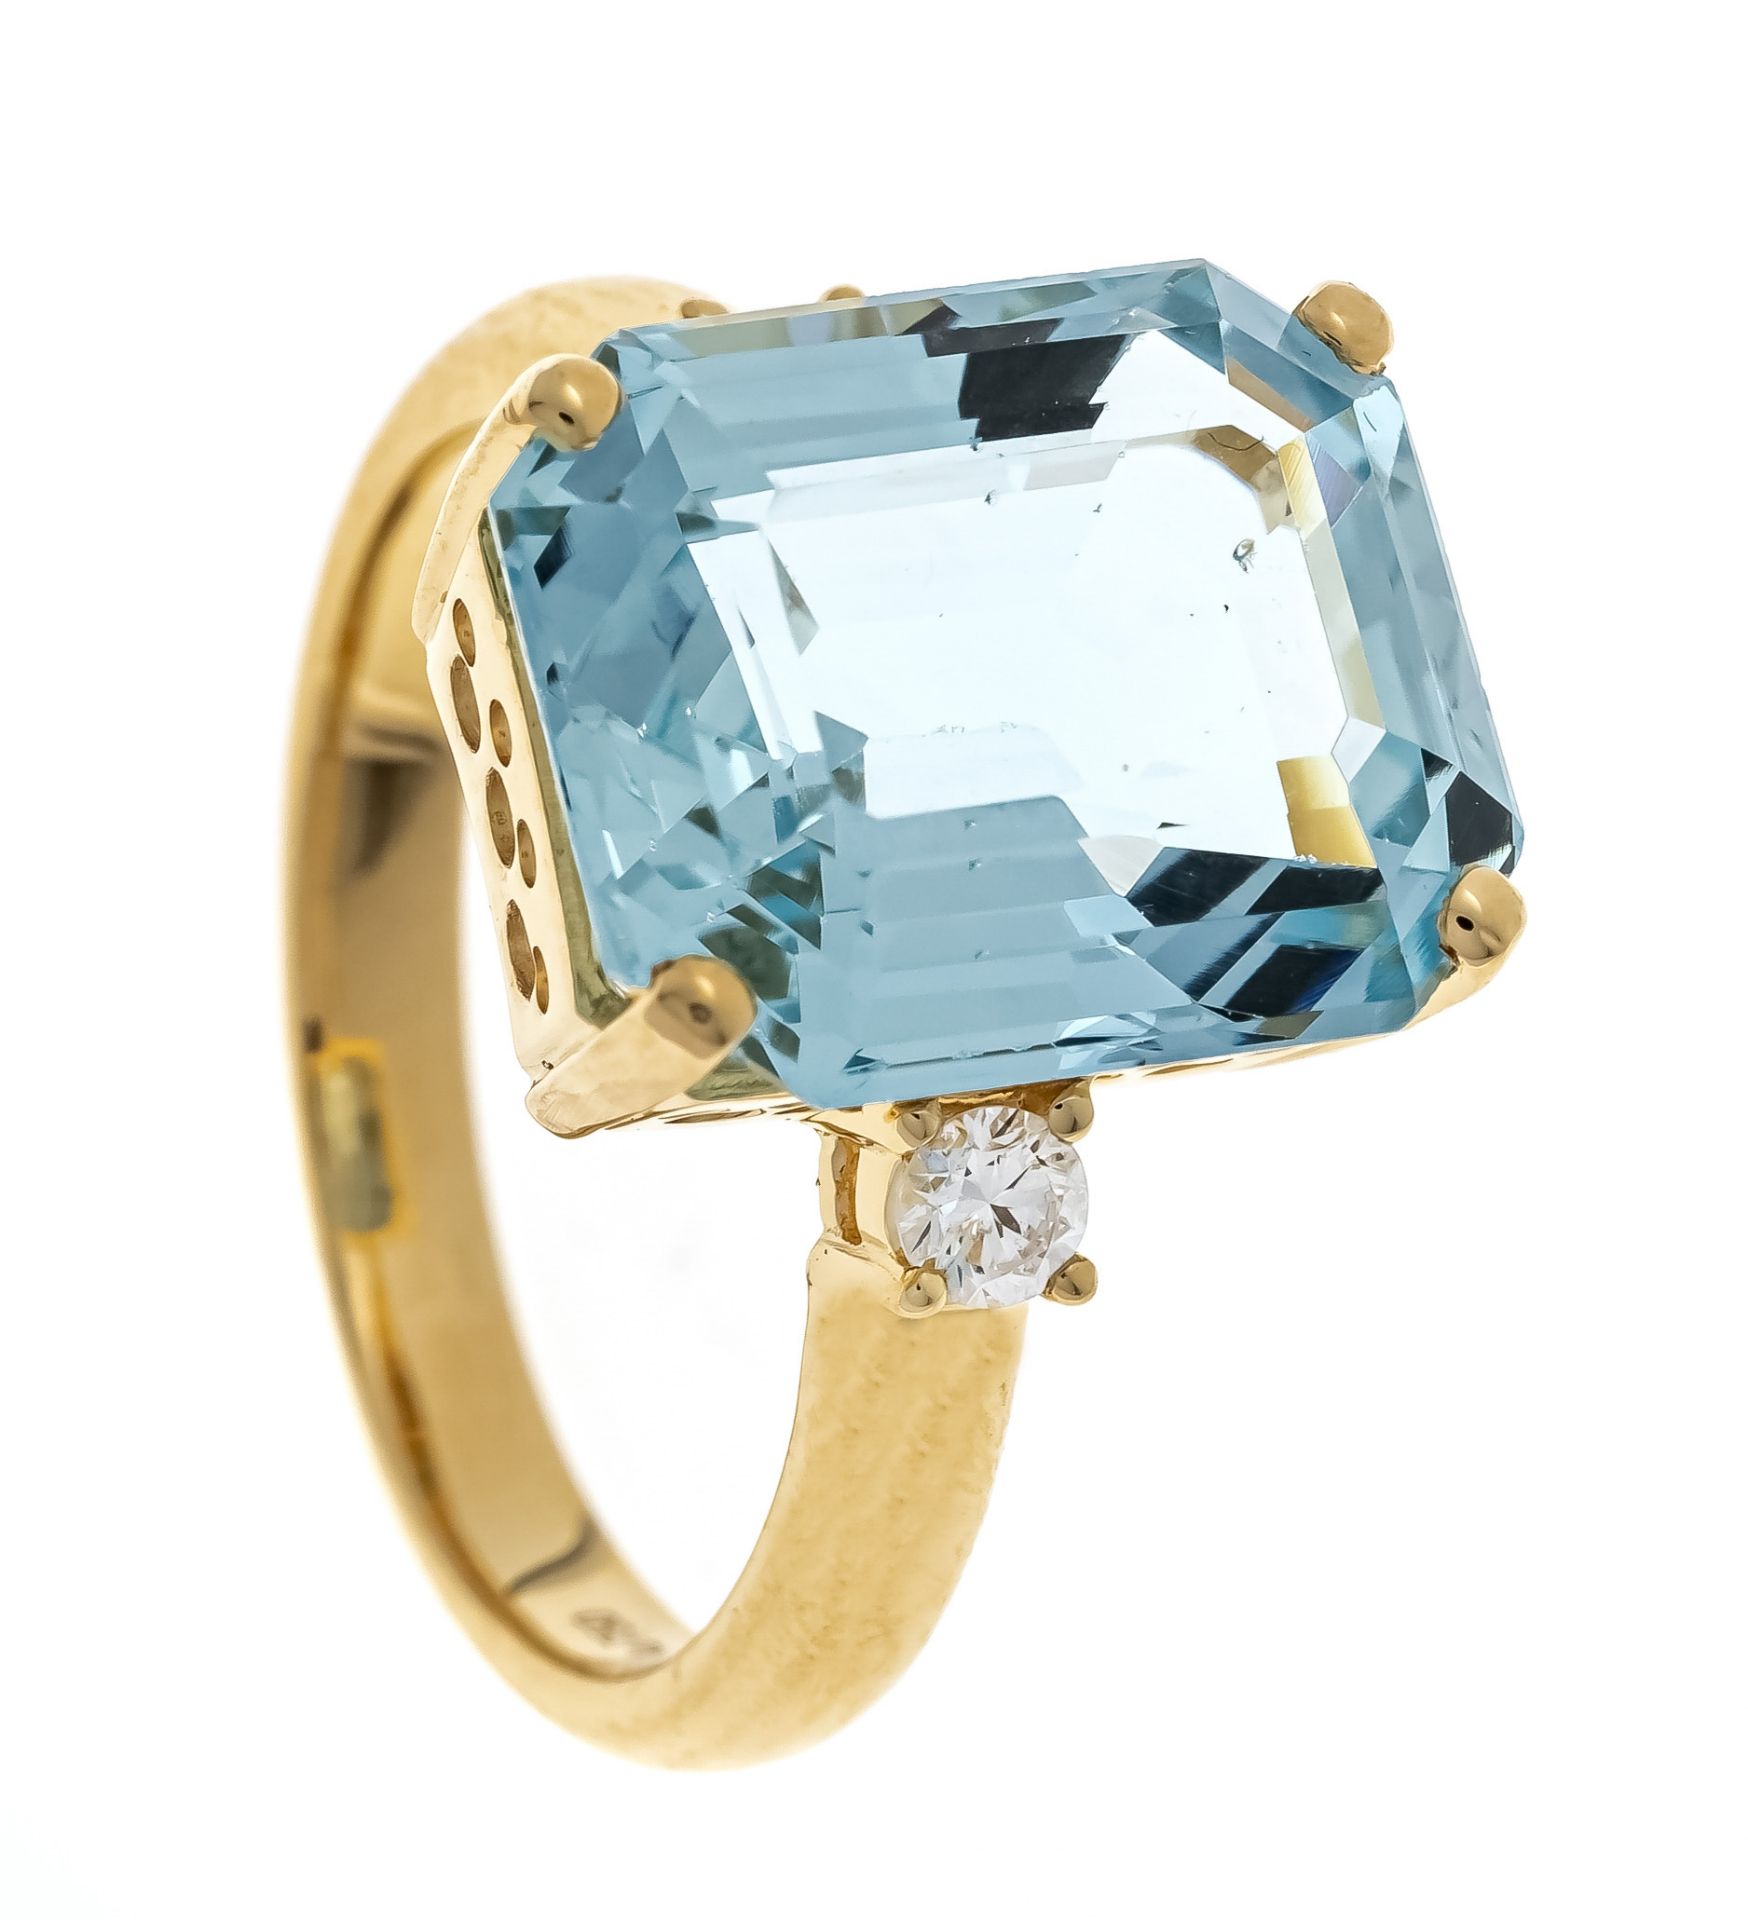 Aquamarine diamond ring GG 750/000 with an emerald-cut faceted aquamarine 10 ct, fine light blue,